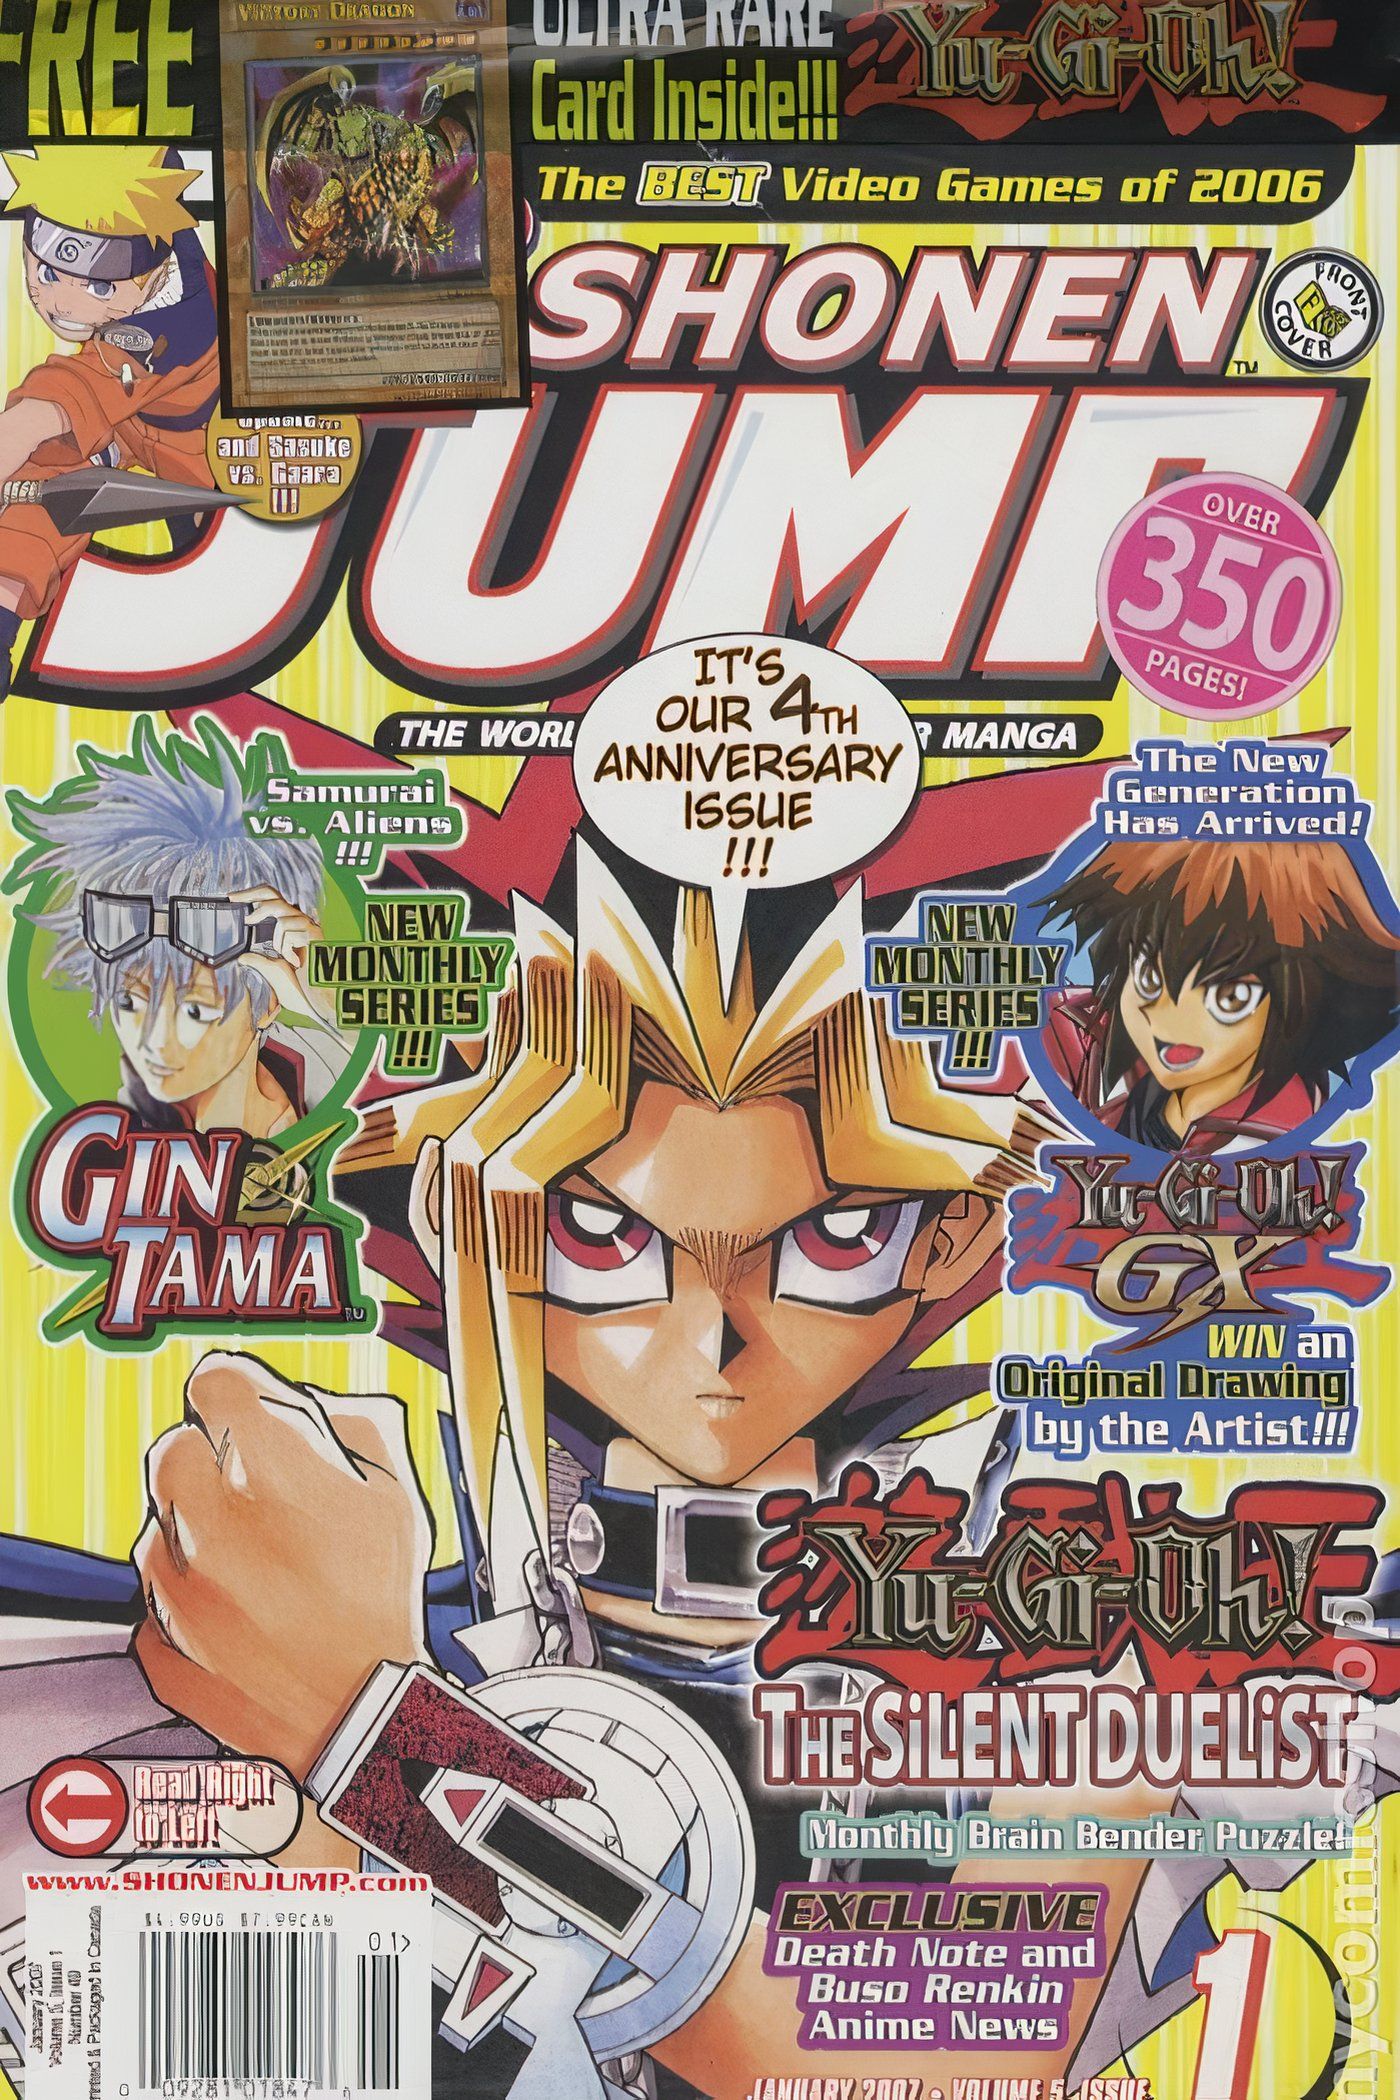 American Weekly Shonen Jump 49 featuring Yugi Muto from Yu-Gi-Oh!